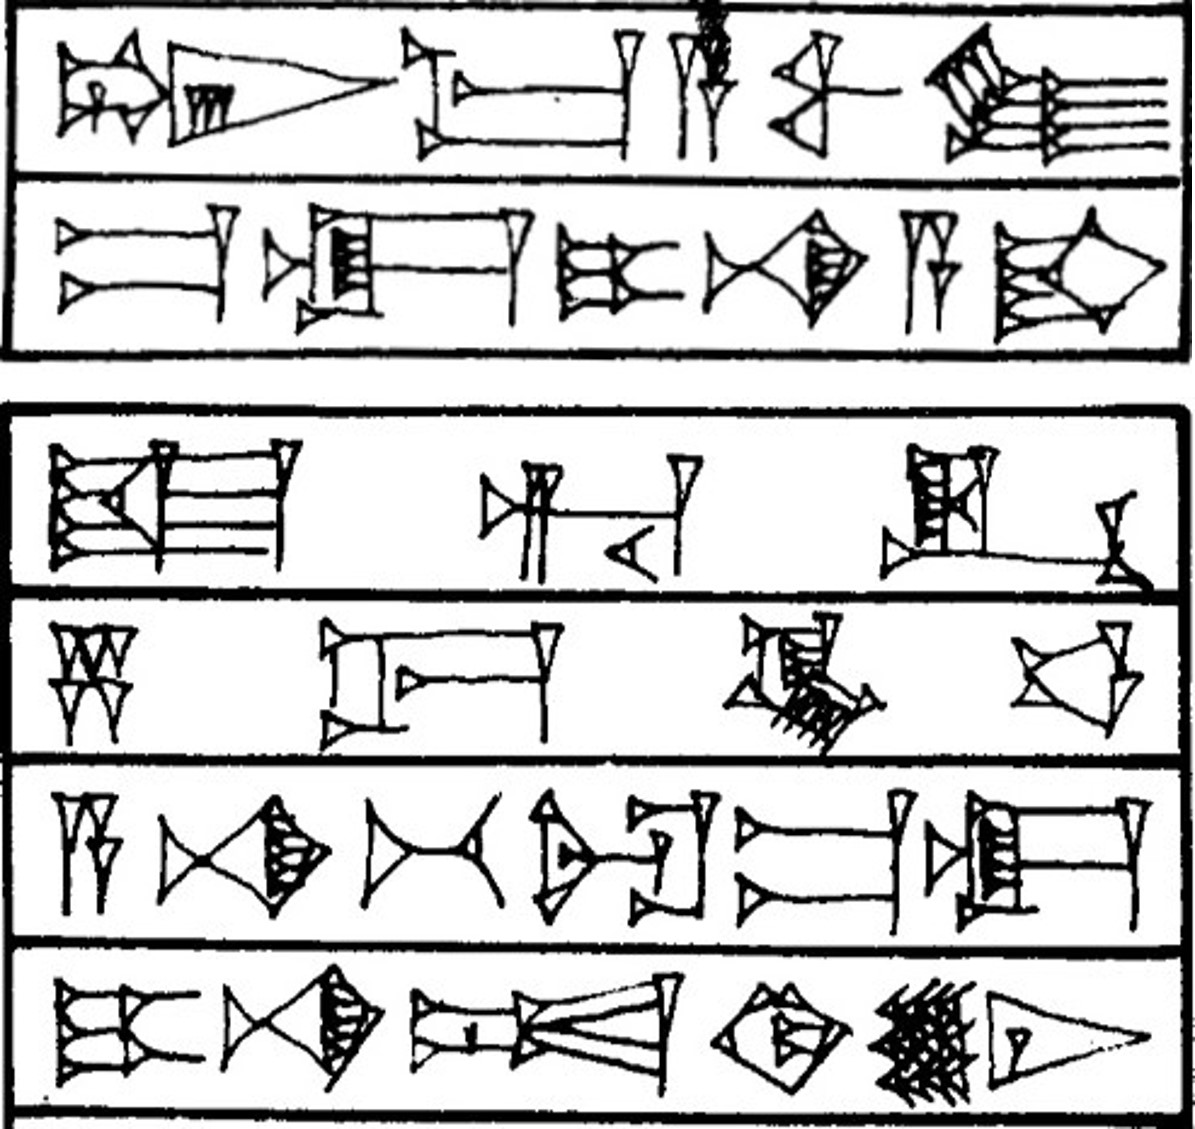 Law § 259 - Cuneiform - Law Code of Hammurabi